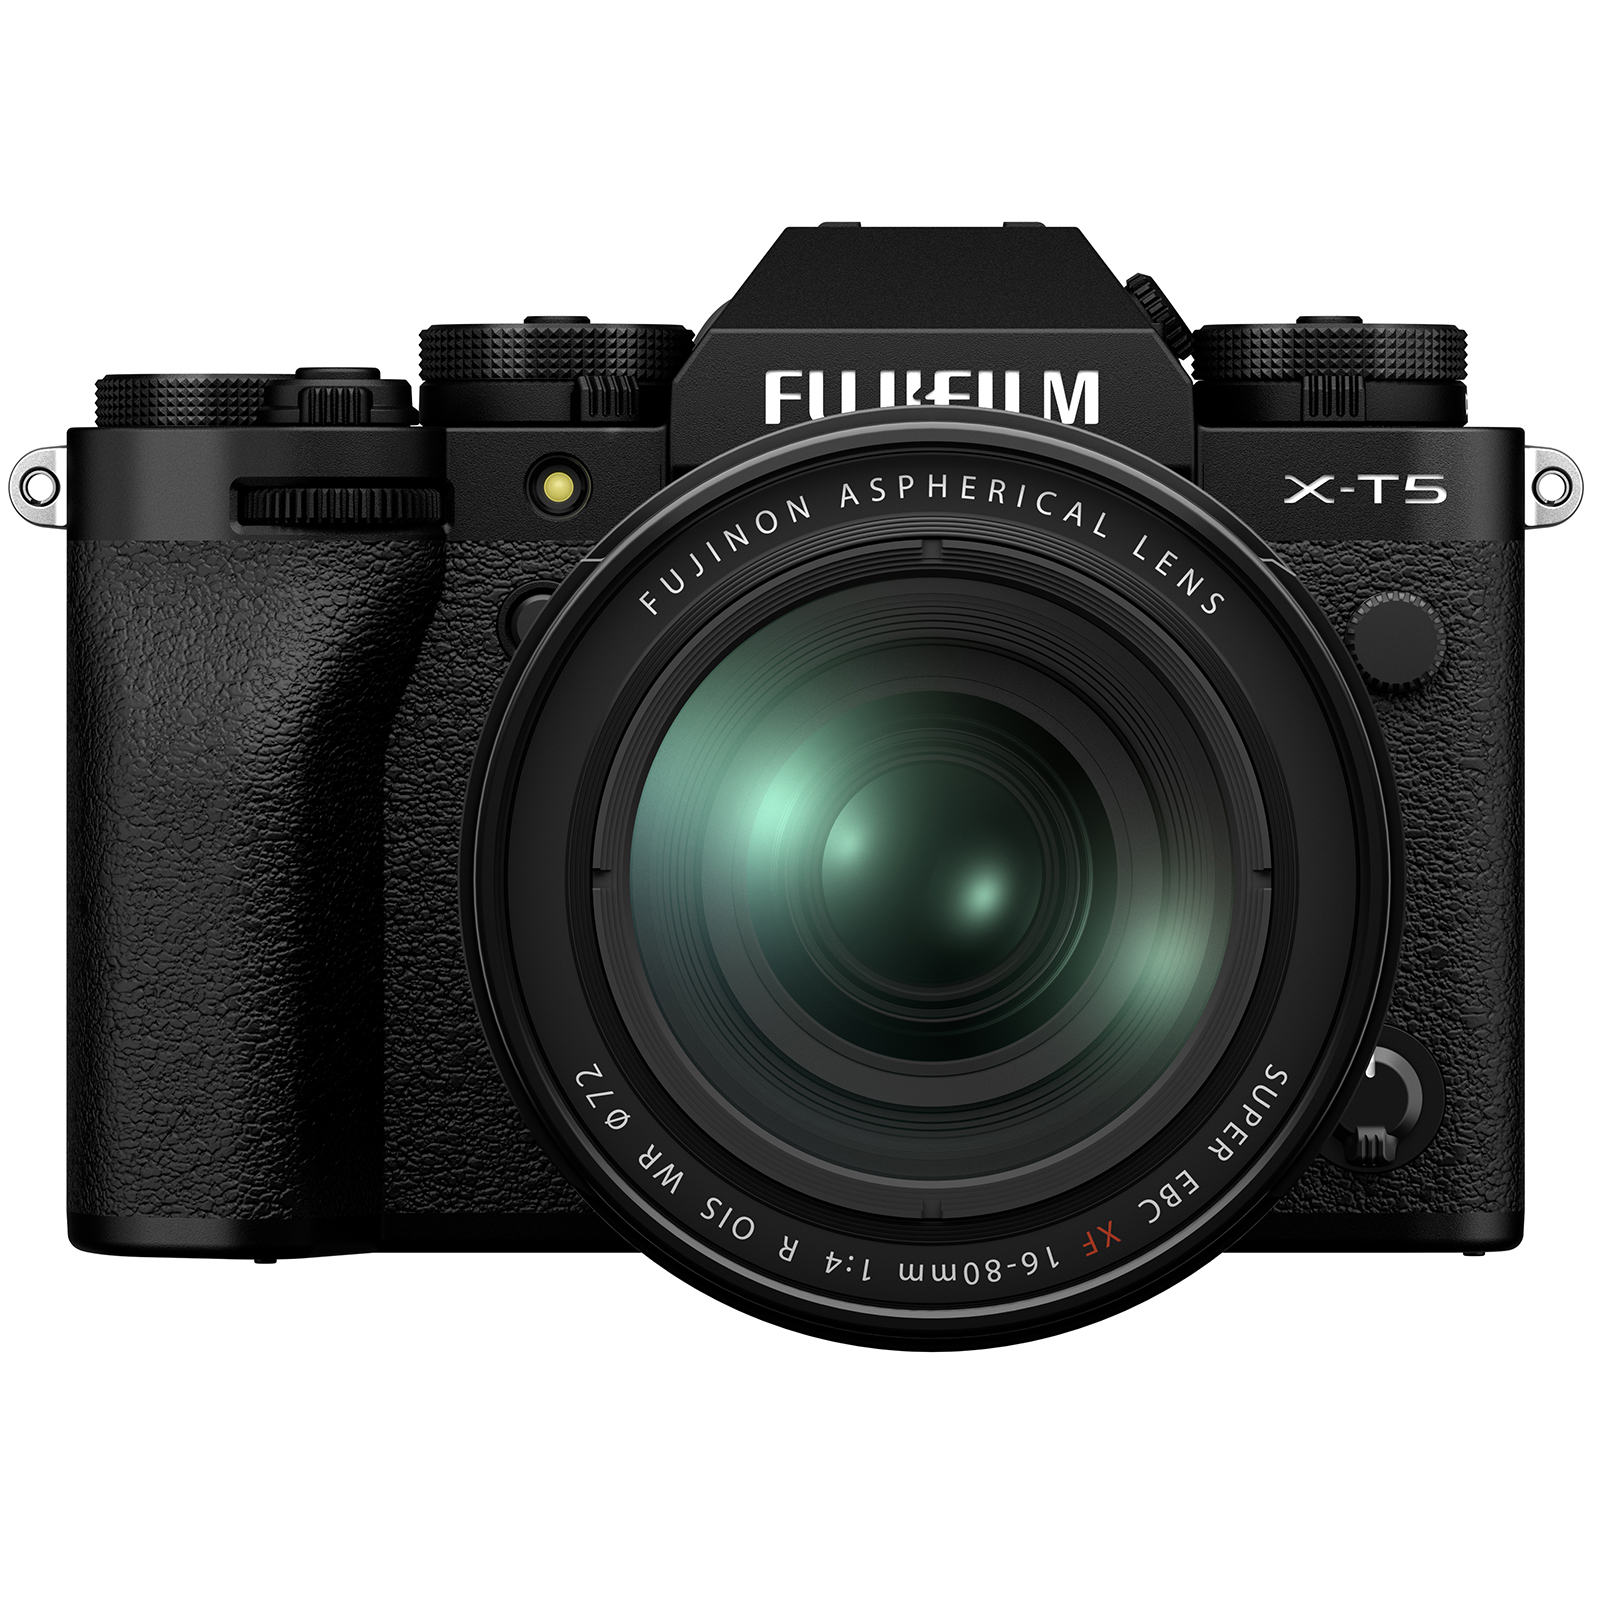 Image of Fujifilm XT5 Digital Camera with XF 1680mm Lens Black